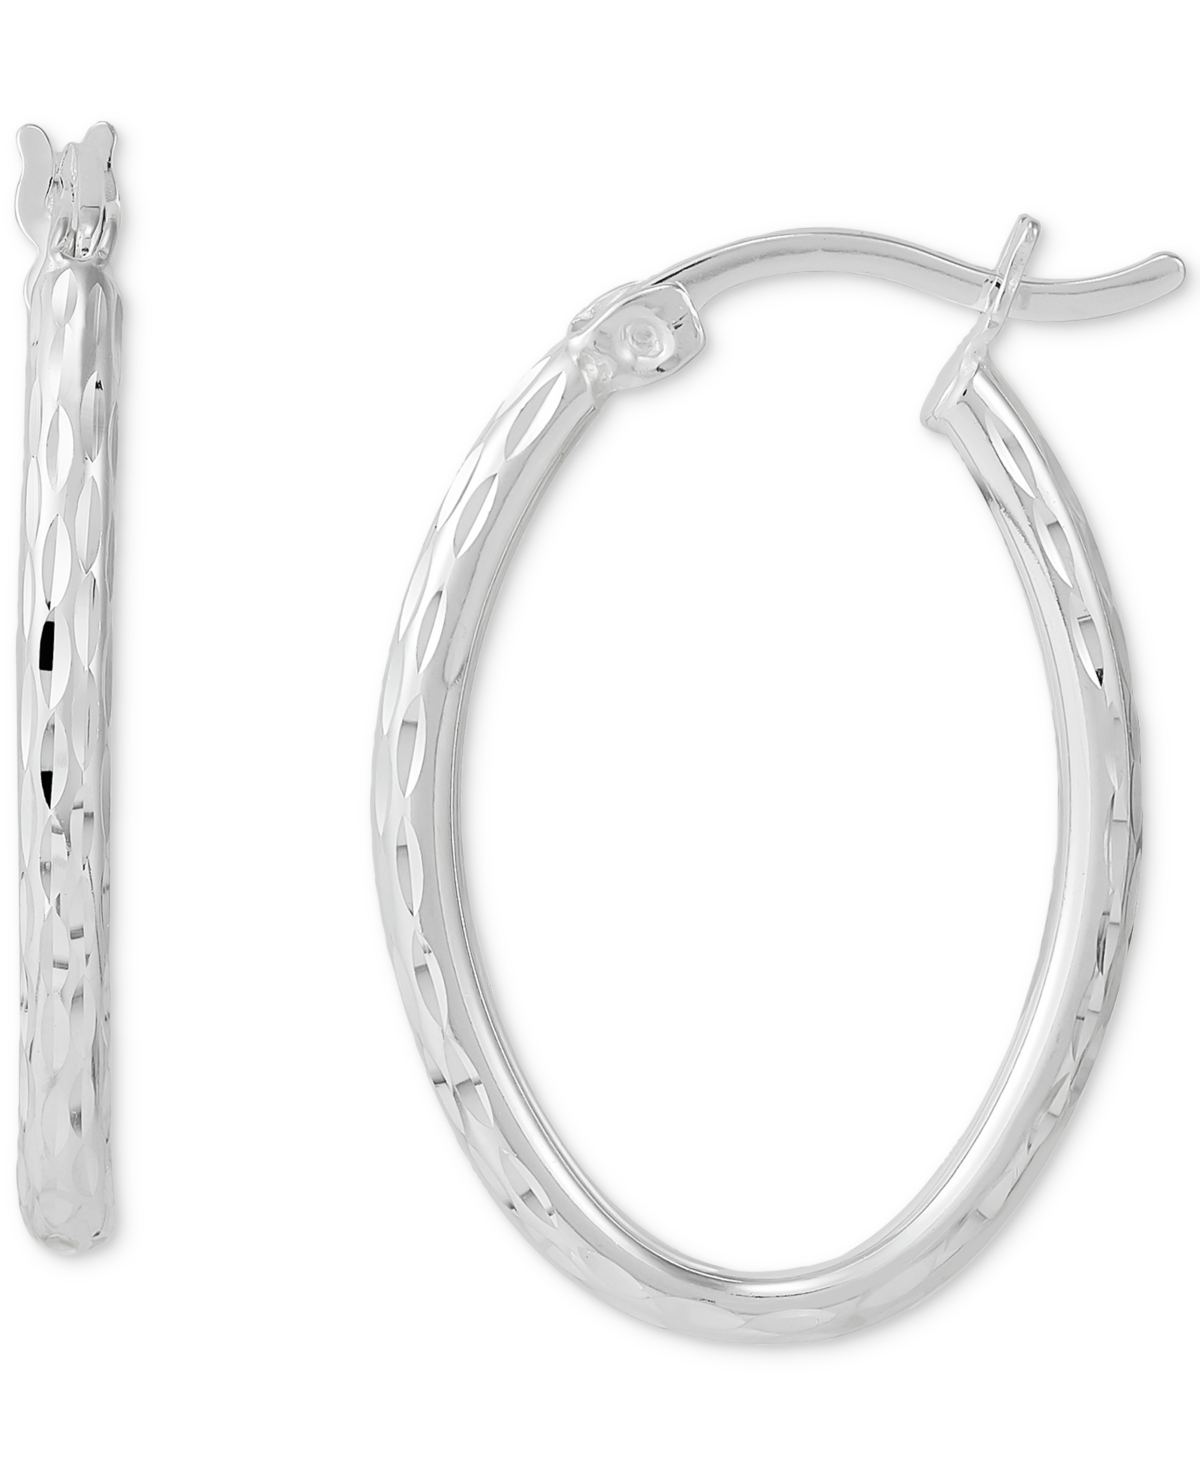 Giani Bernini Textured Oval Hoop Earrings 25mm, Created For Macy's In Silver